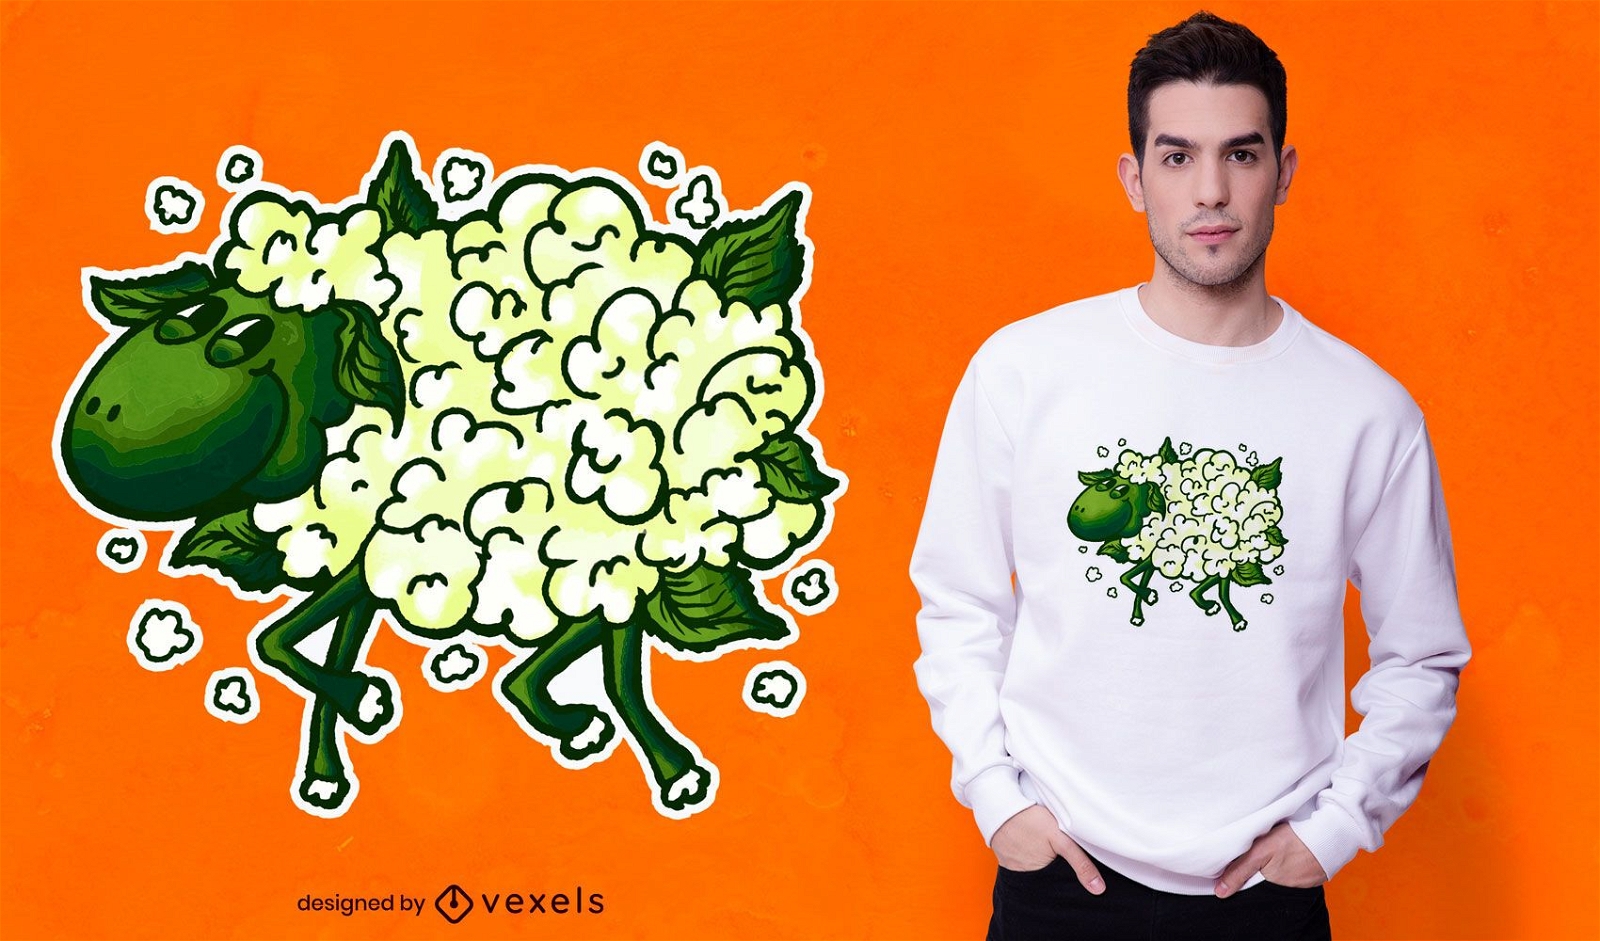 Cauliflower sheep t-shirt design